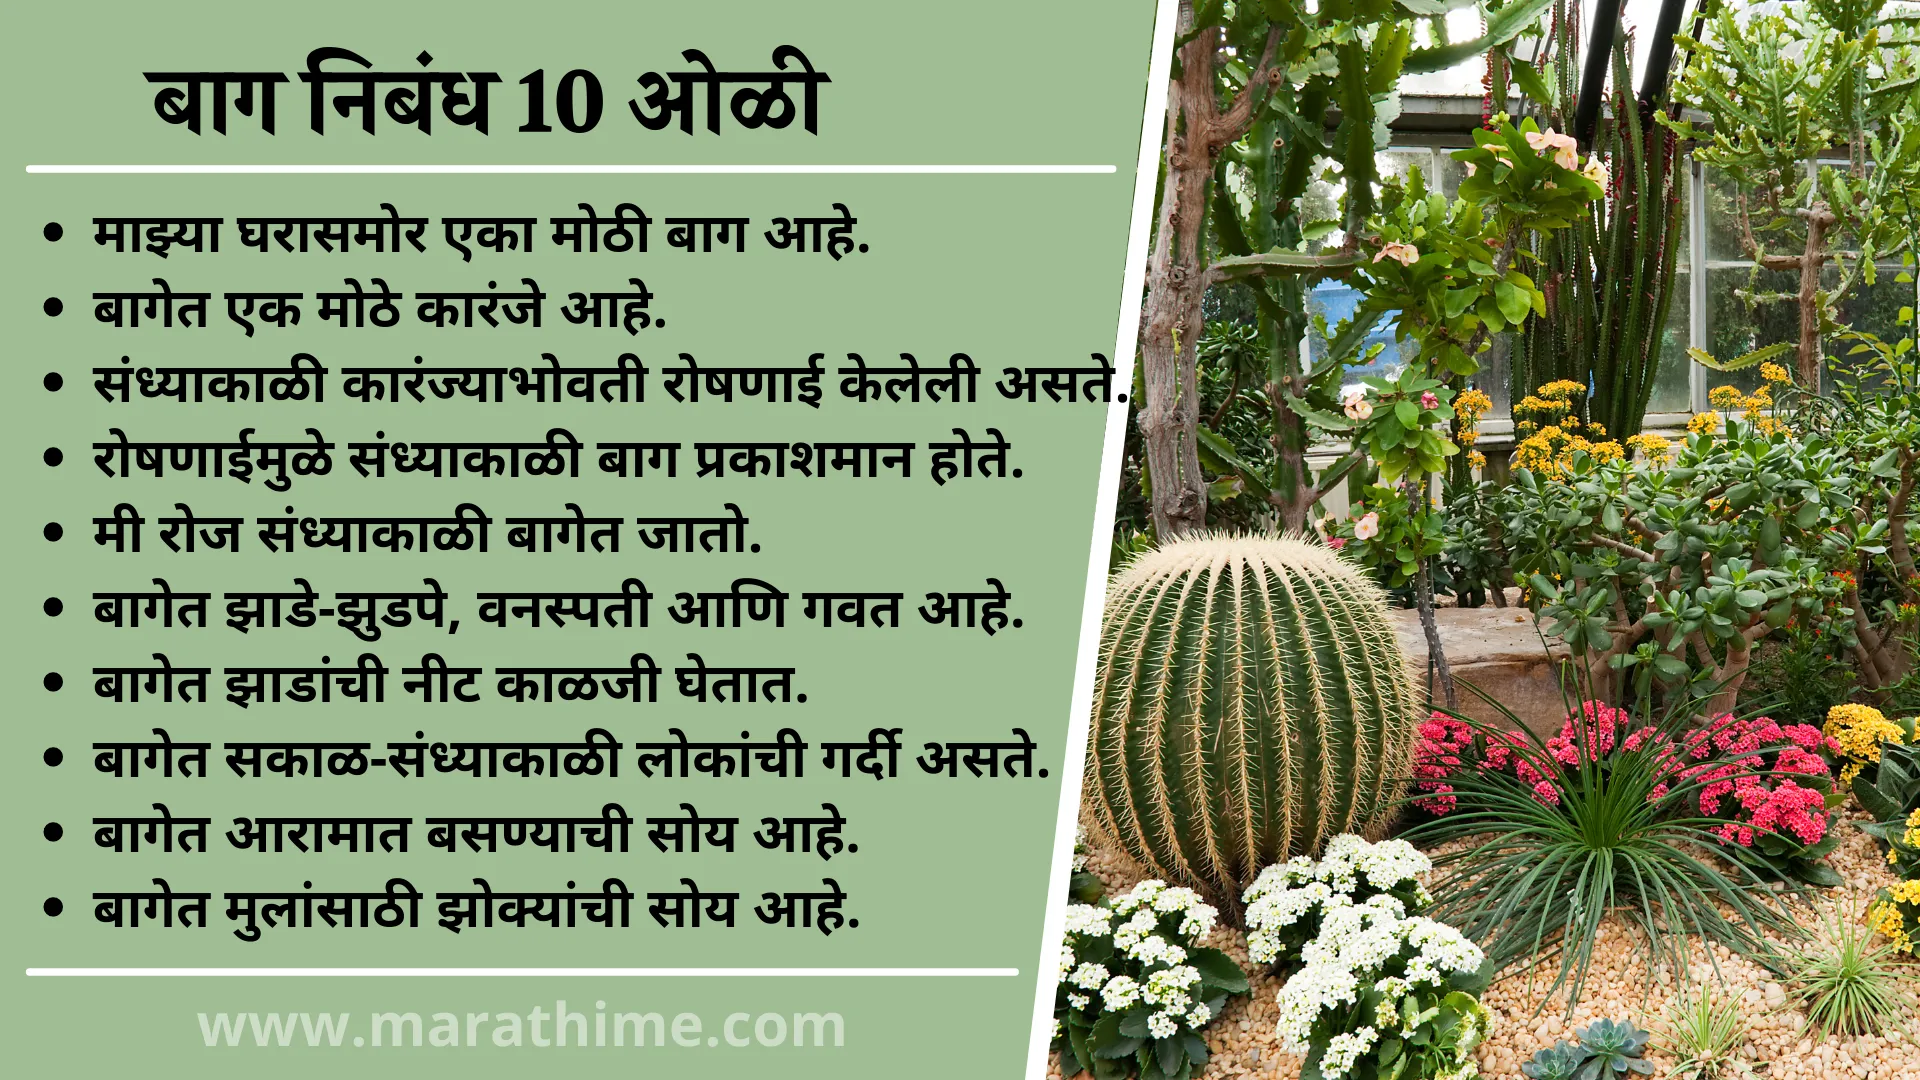 बाग निबंध 10 ओळी, 10 Lines On Garden in Marathi